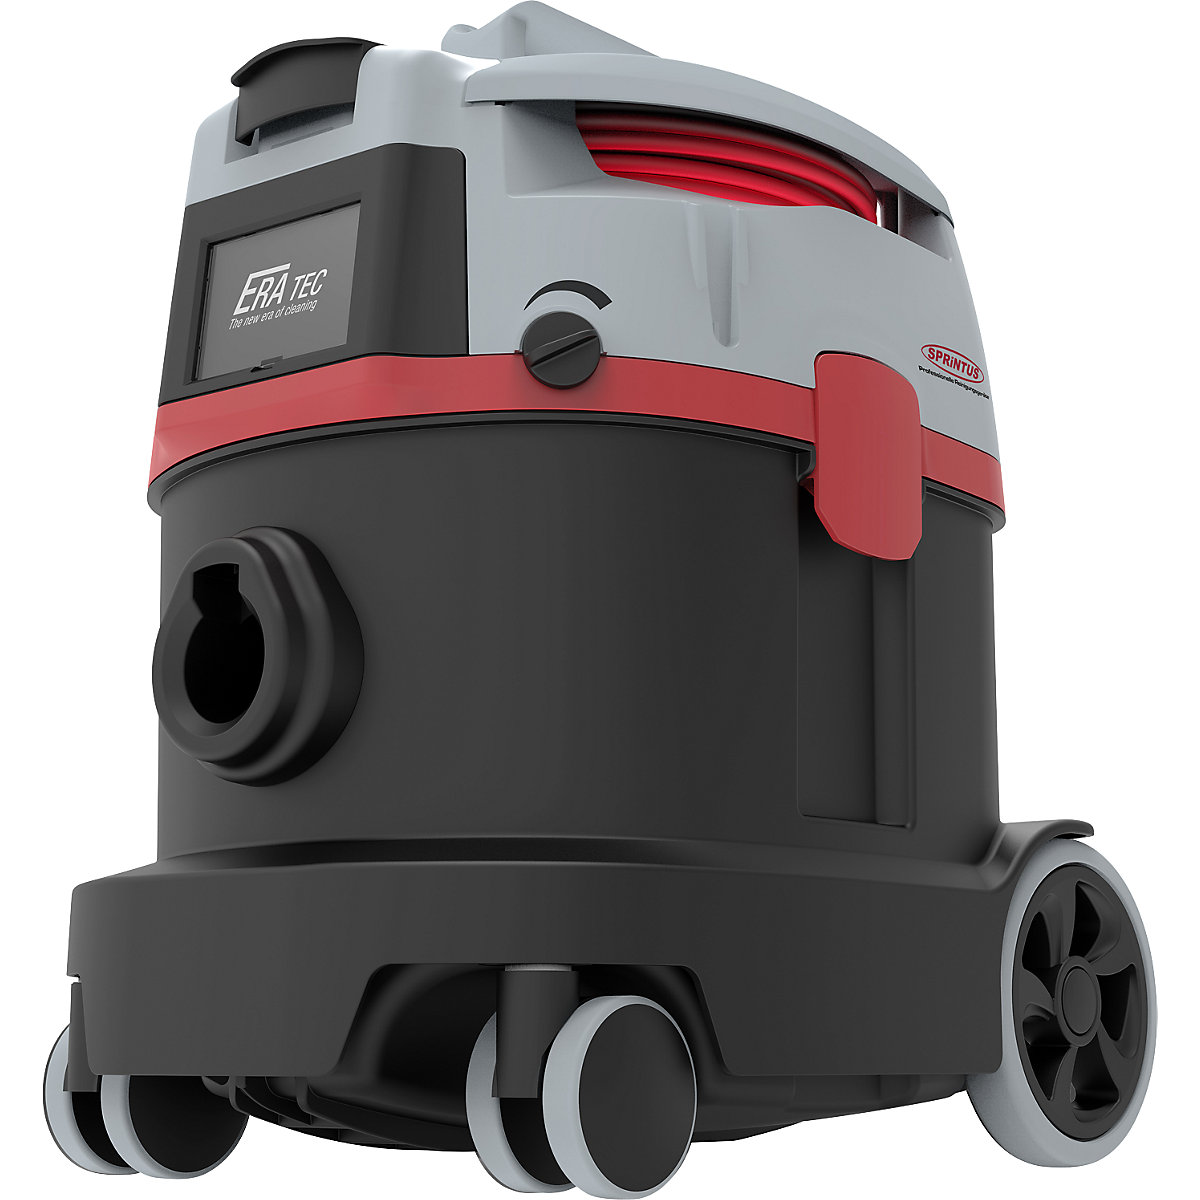 Dry vacuum cleaner for sensitive areas - Sprintus